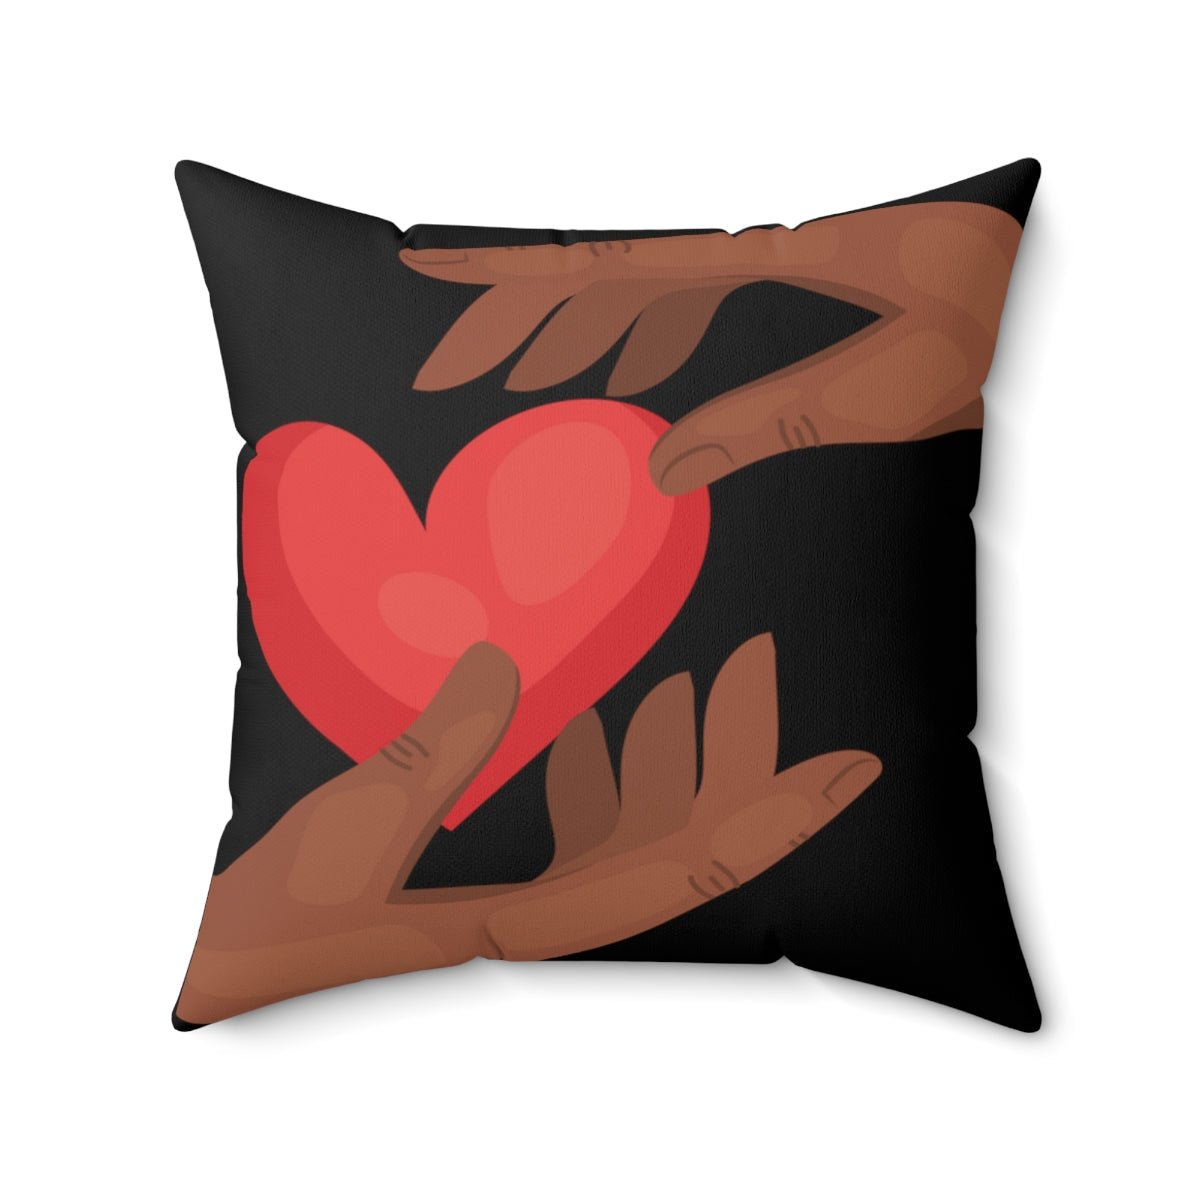 Black Love Pillow - The Trini Gee